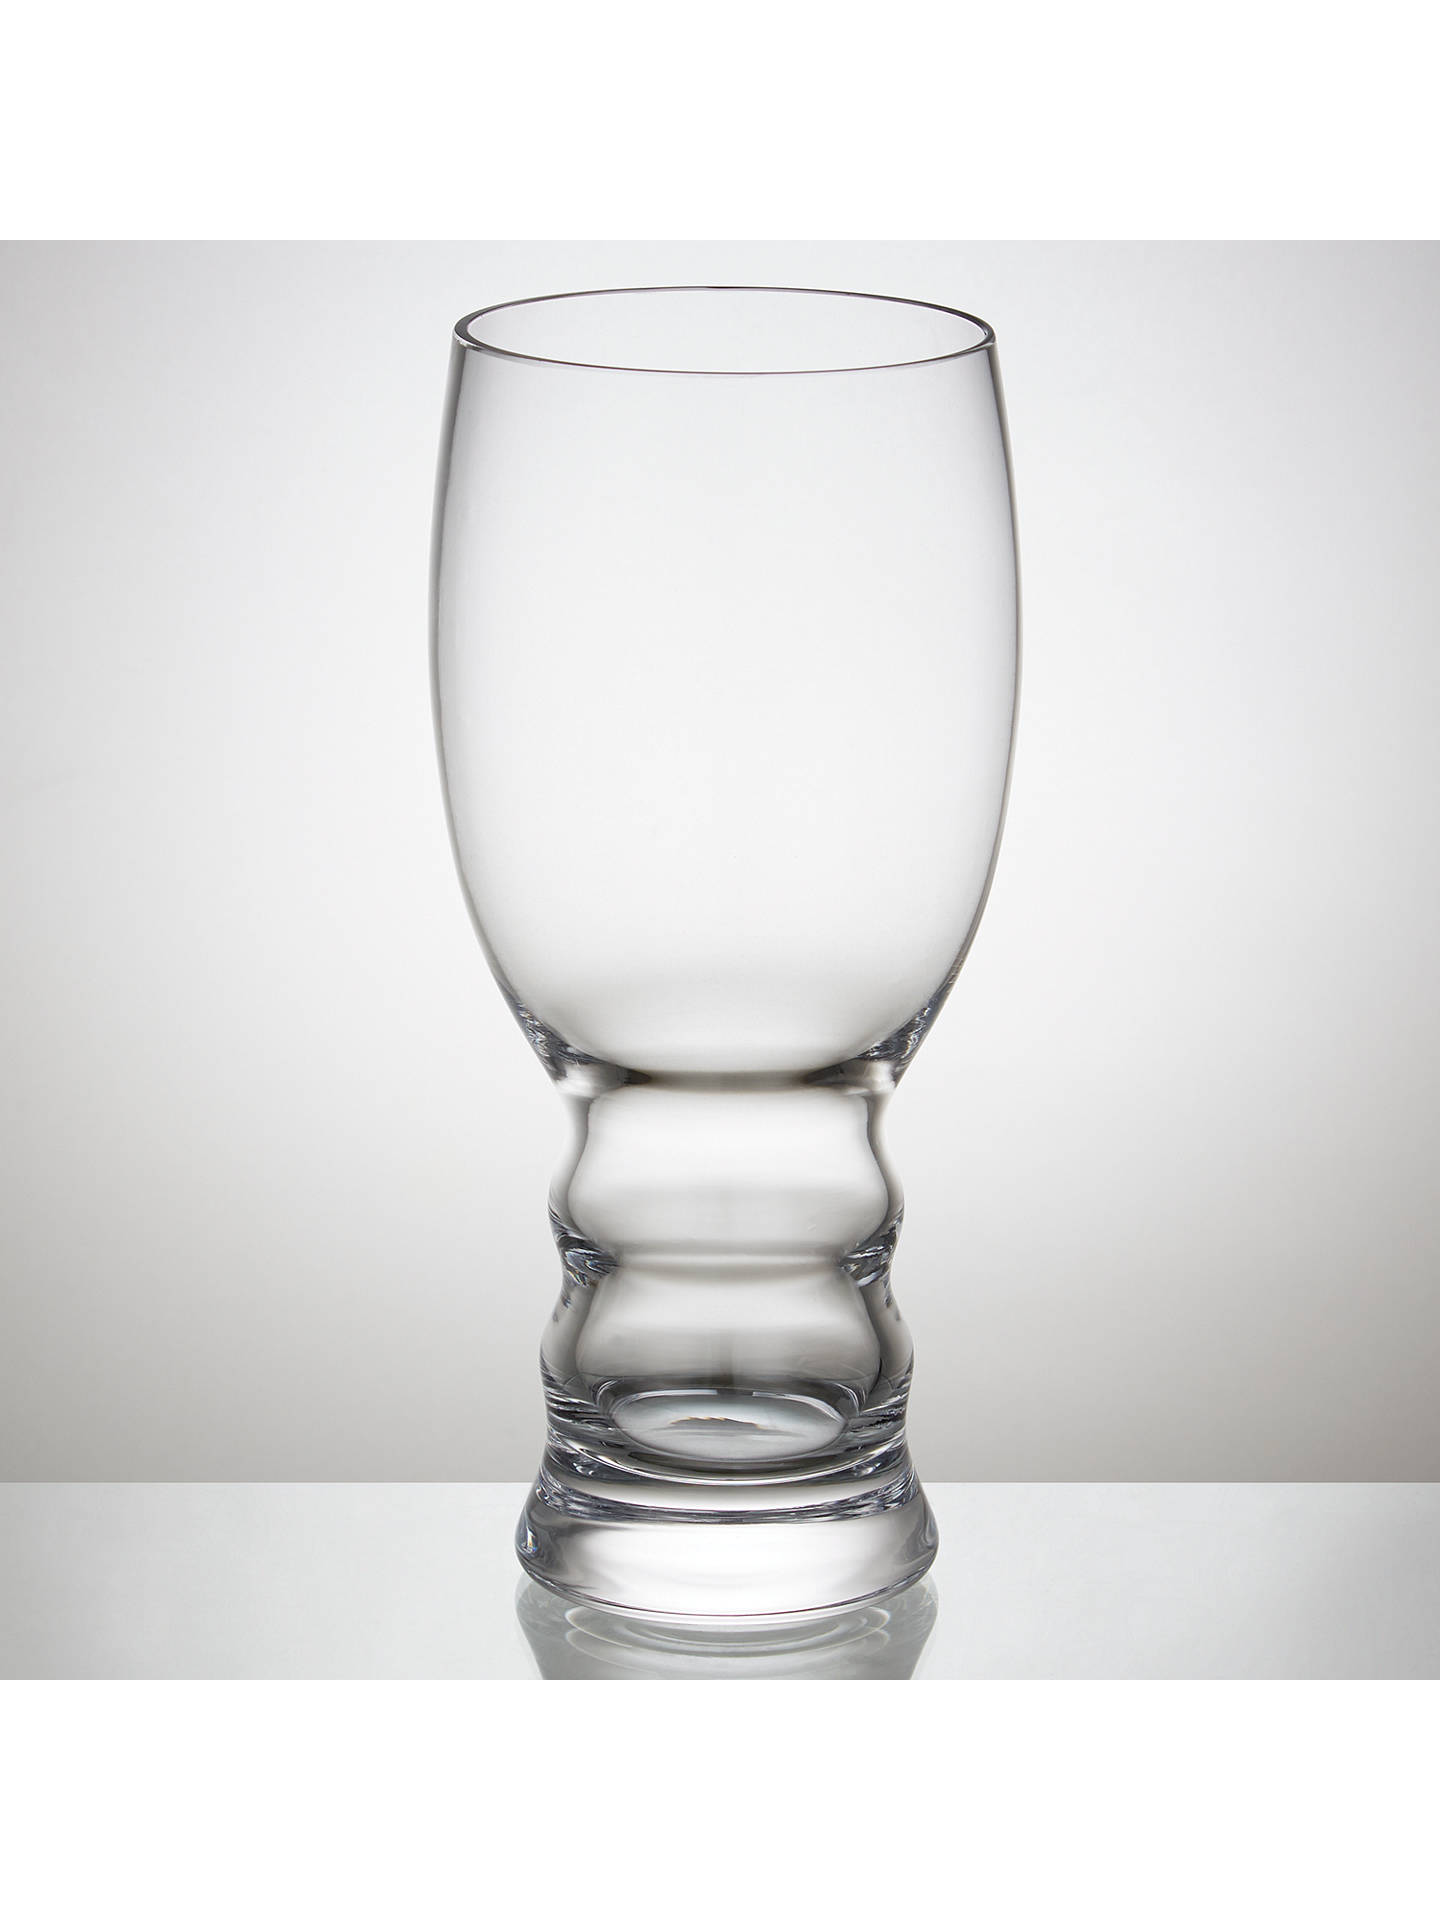 Dartington cider glass